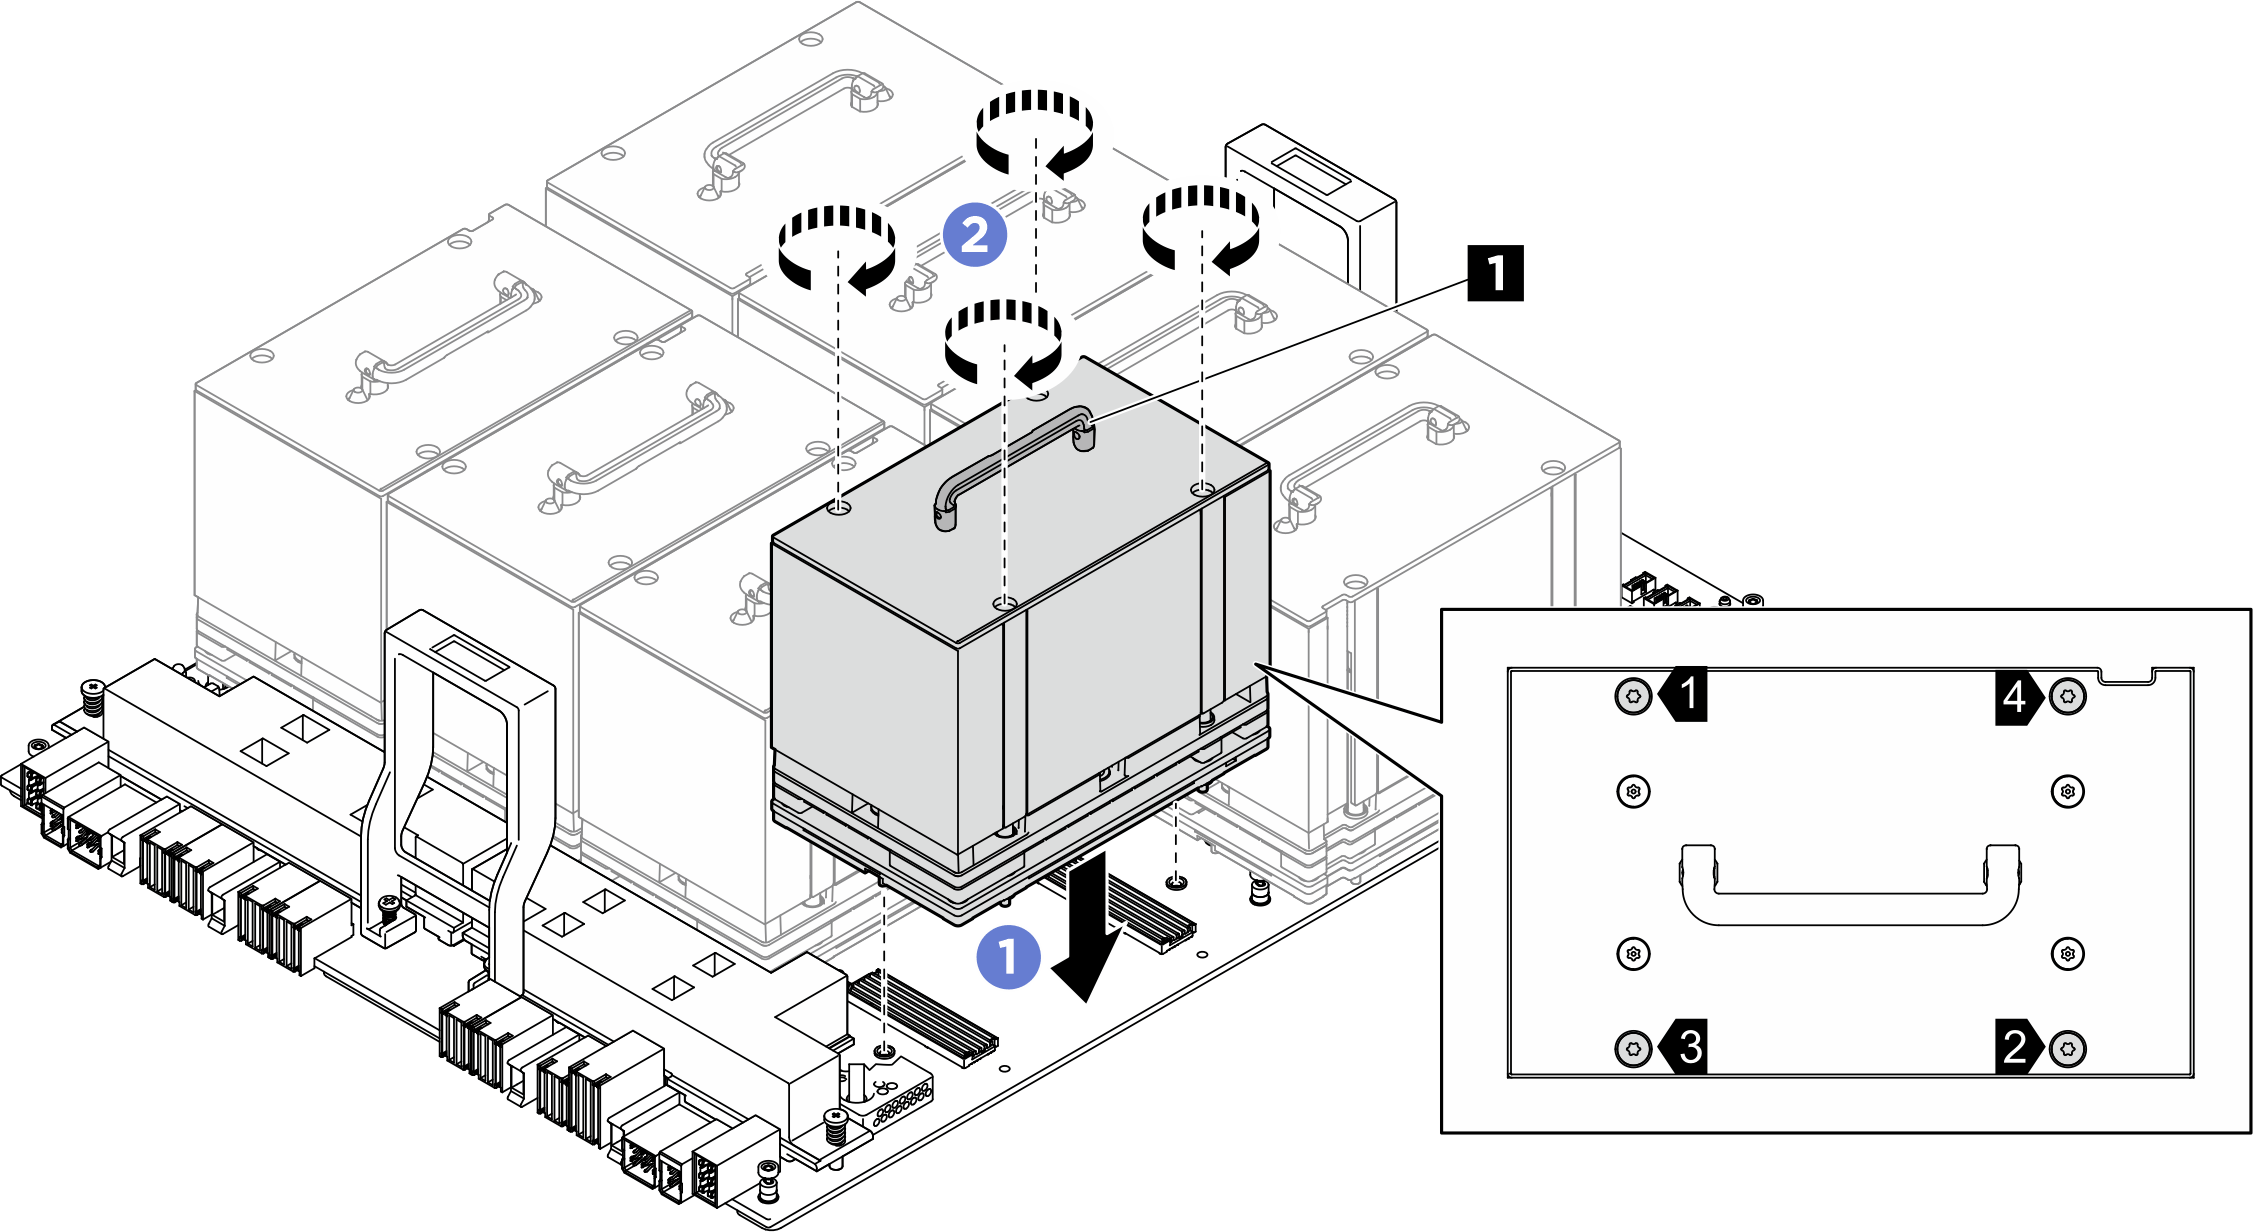 GPU and heat sink module installation